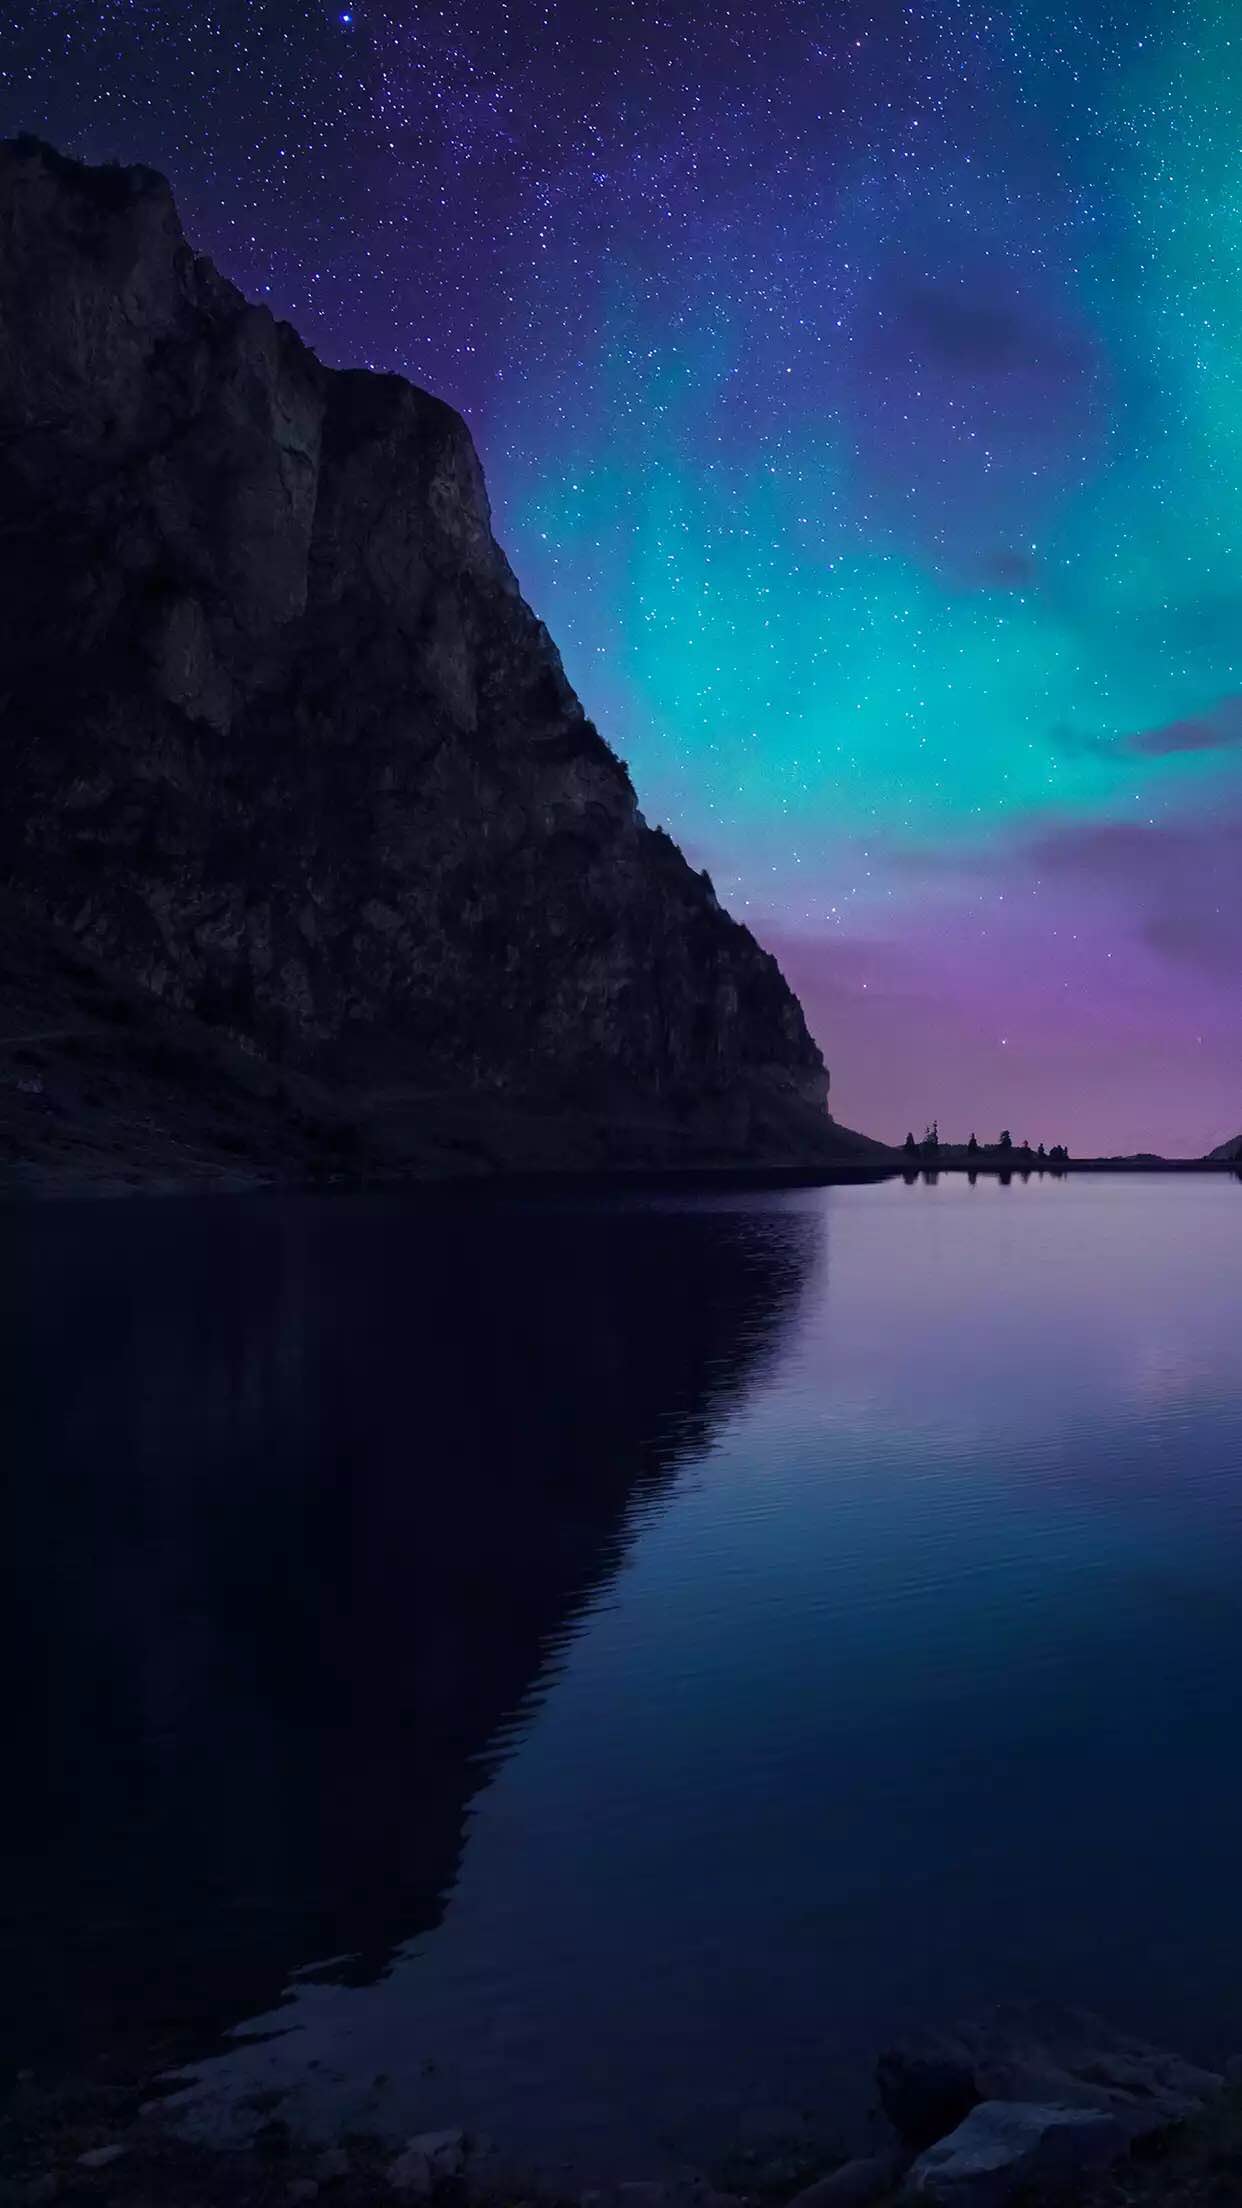 iphone 6 wallpaper hd original,sky,nature,natural landscape,reflection,purple